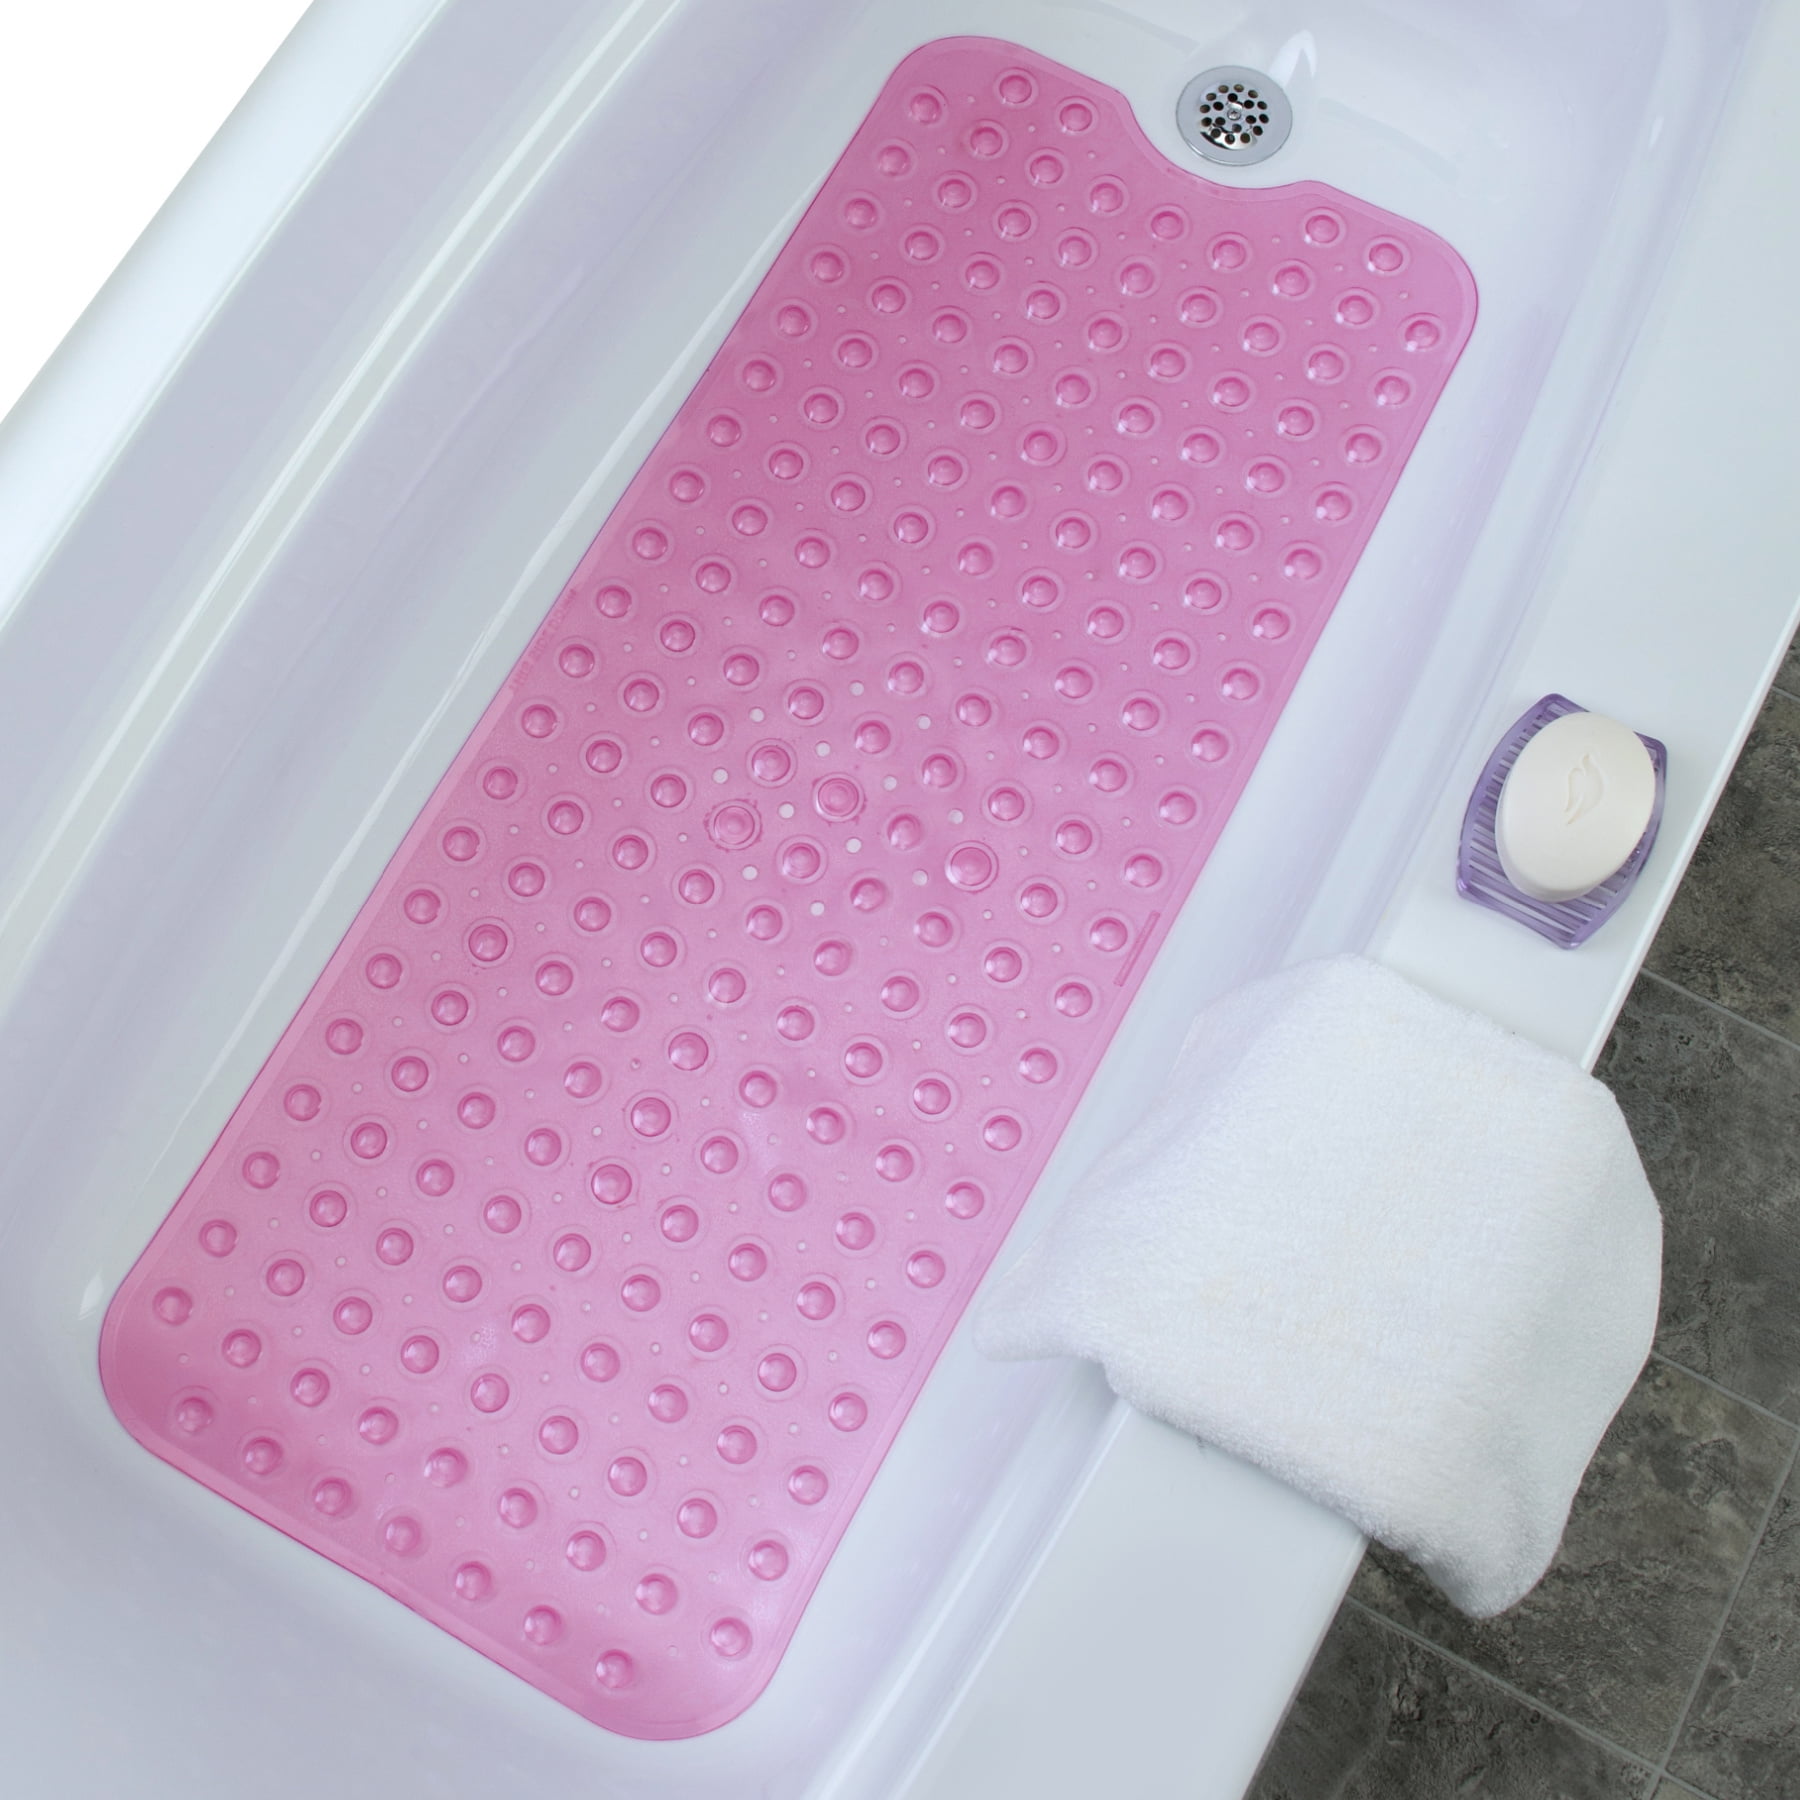 Antom Bathtub and Shower Mats, Extra Long Machine Washable Non-Slip Bath Mat for Bathroom (39 inch x 16 inch)(Aqua Green), Size: 39 x 16